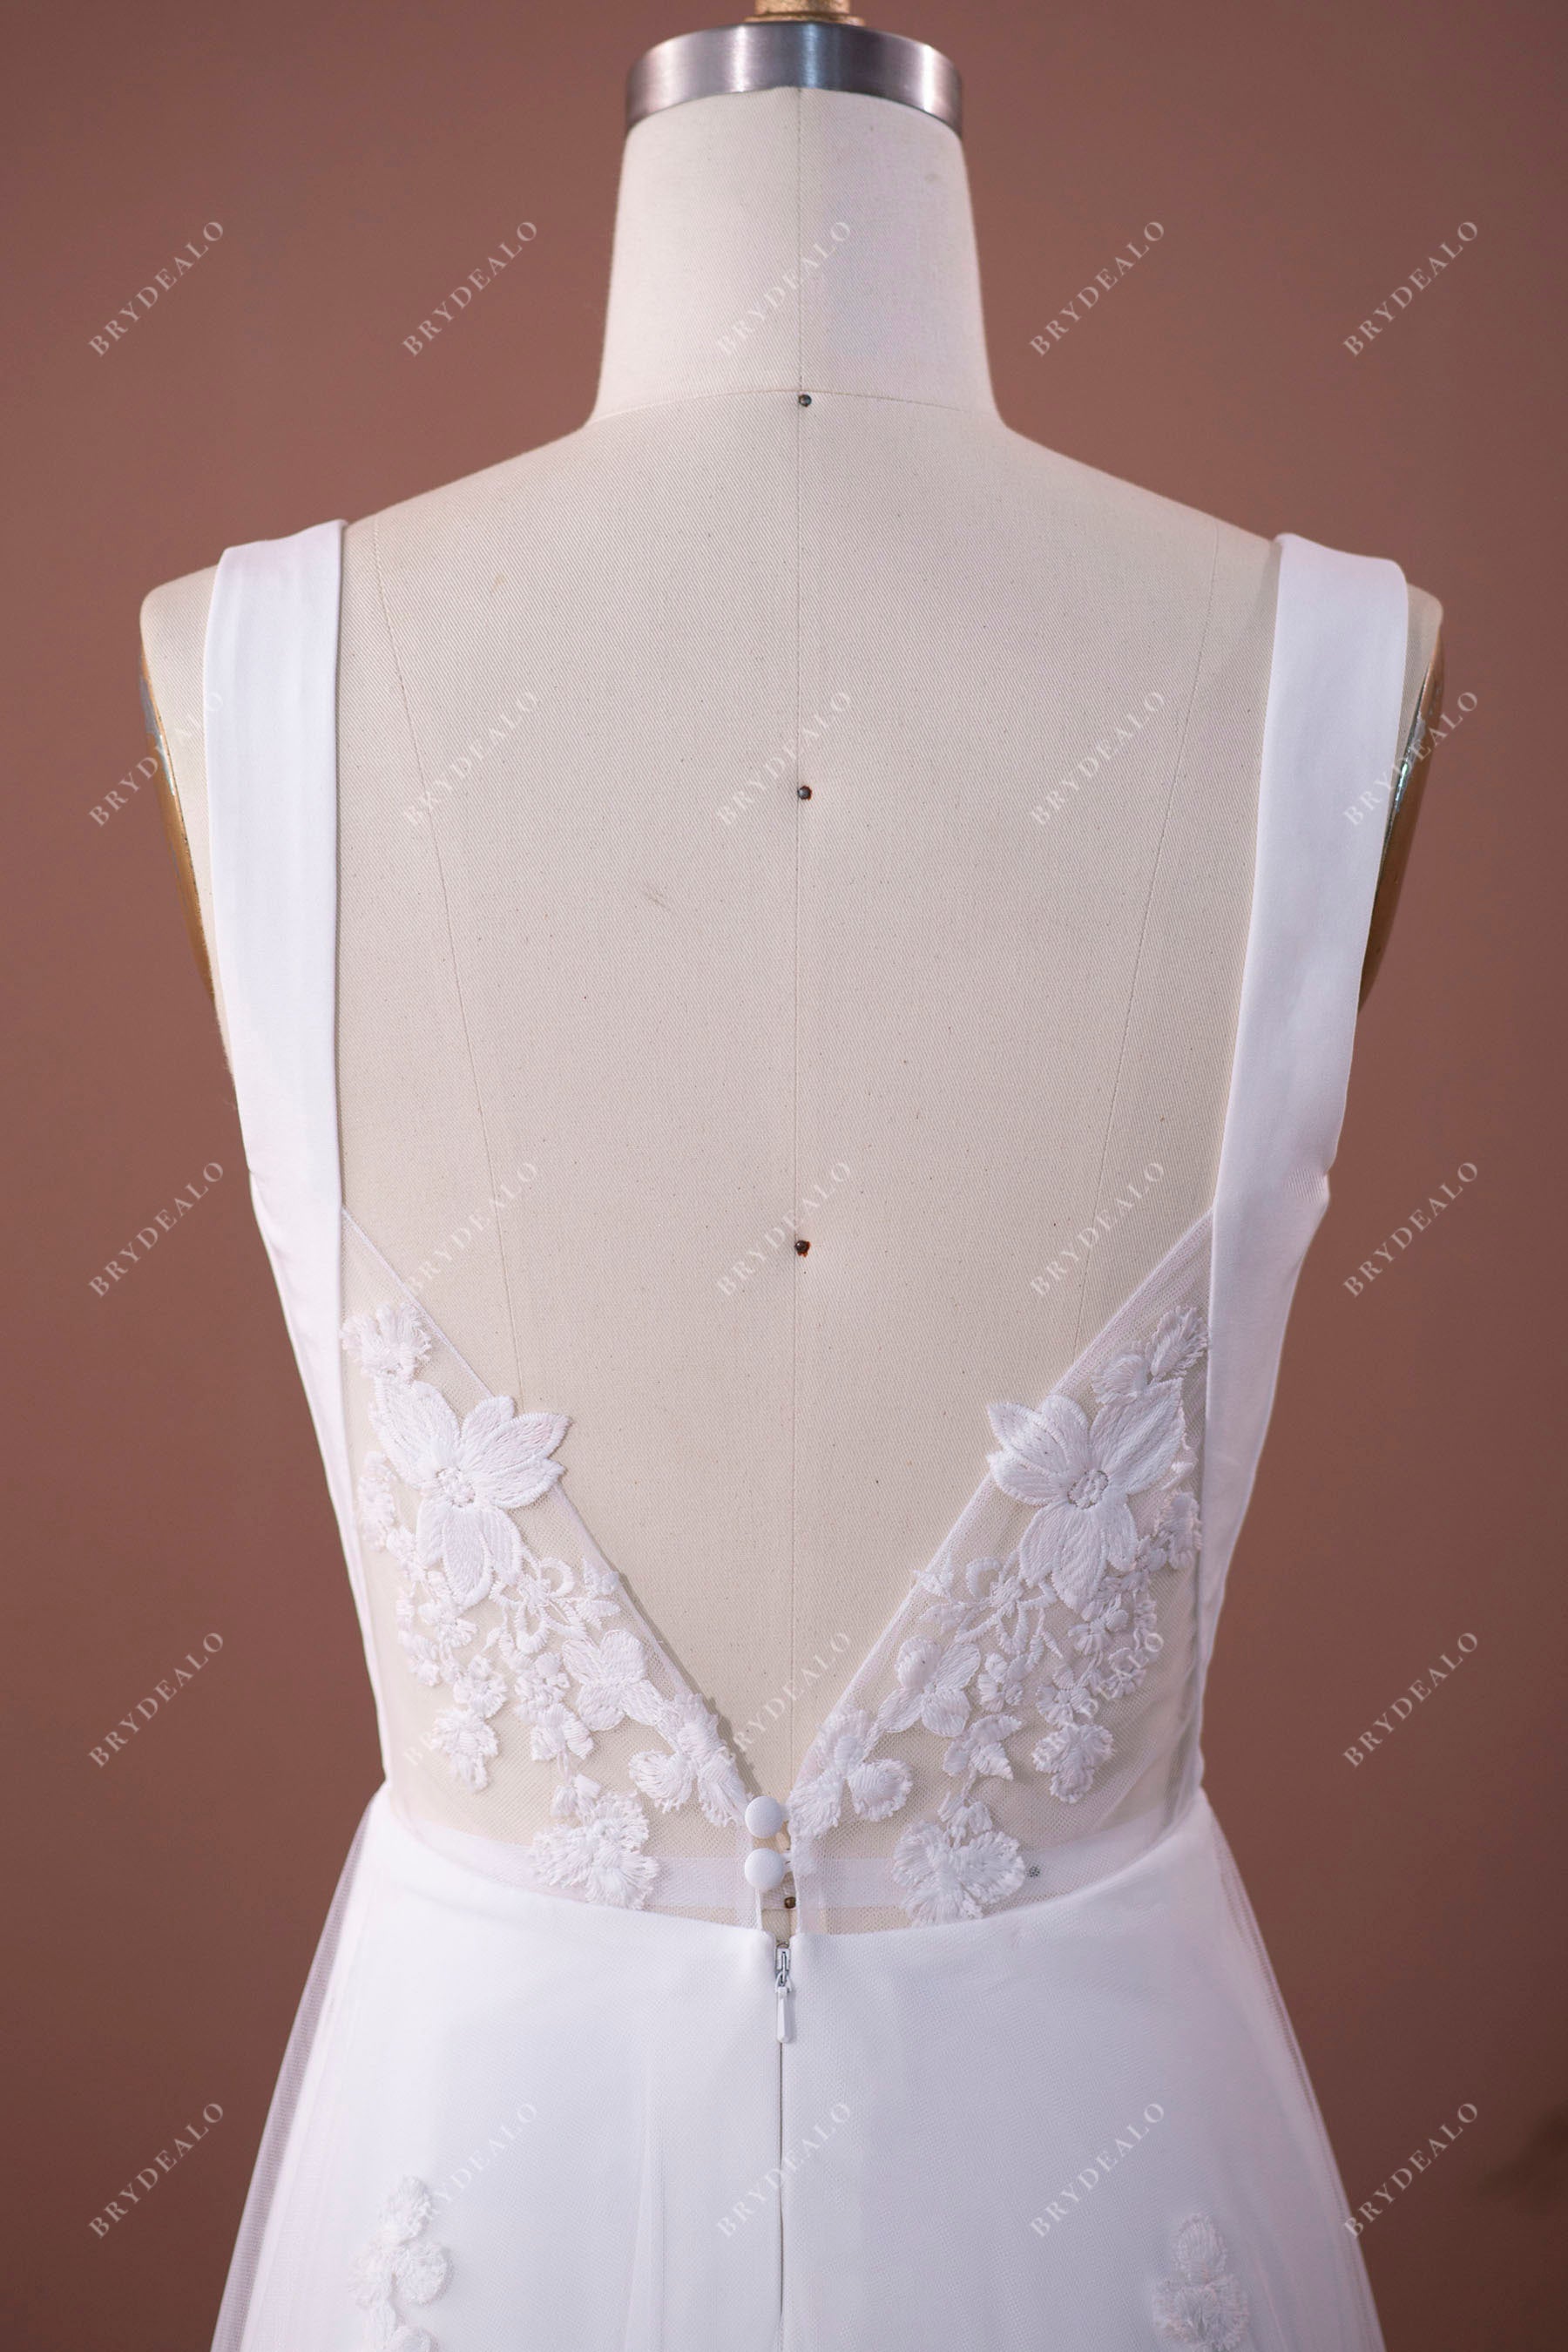 Elegant Mermaid Wedding Dress: Sweetheart Neckline, Illusion Back, Lace  Train